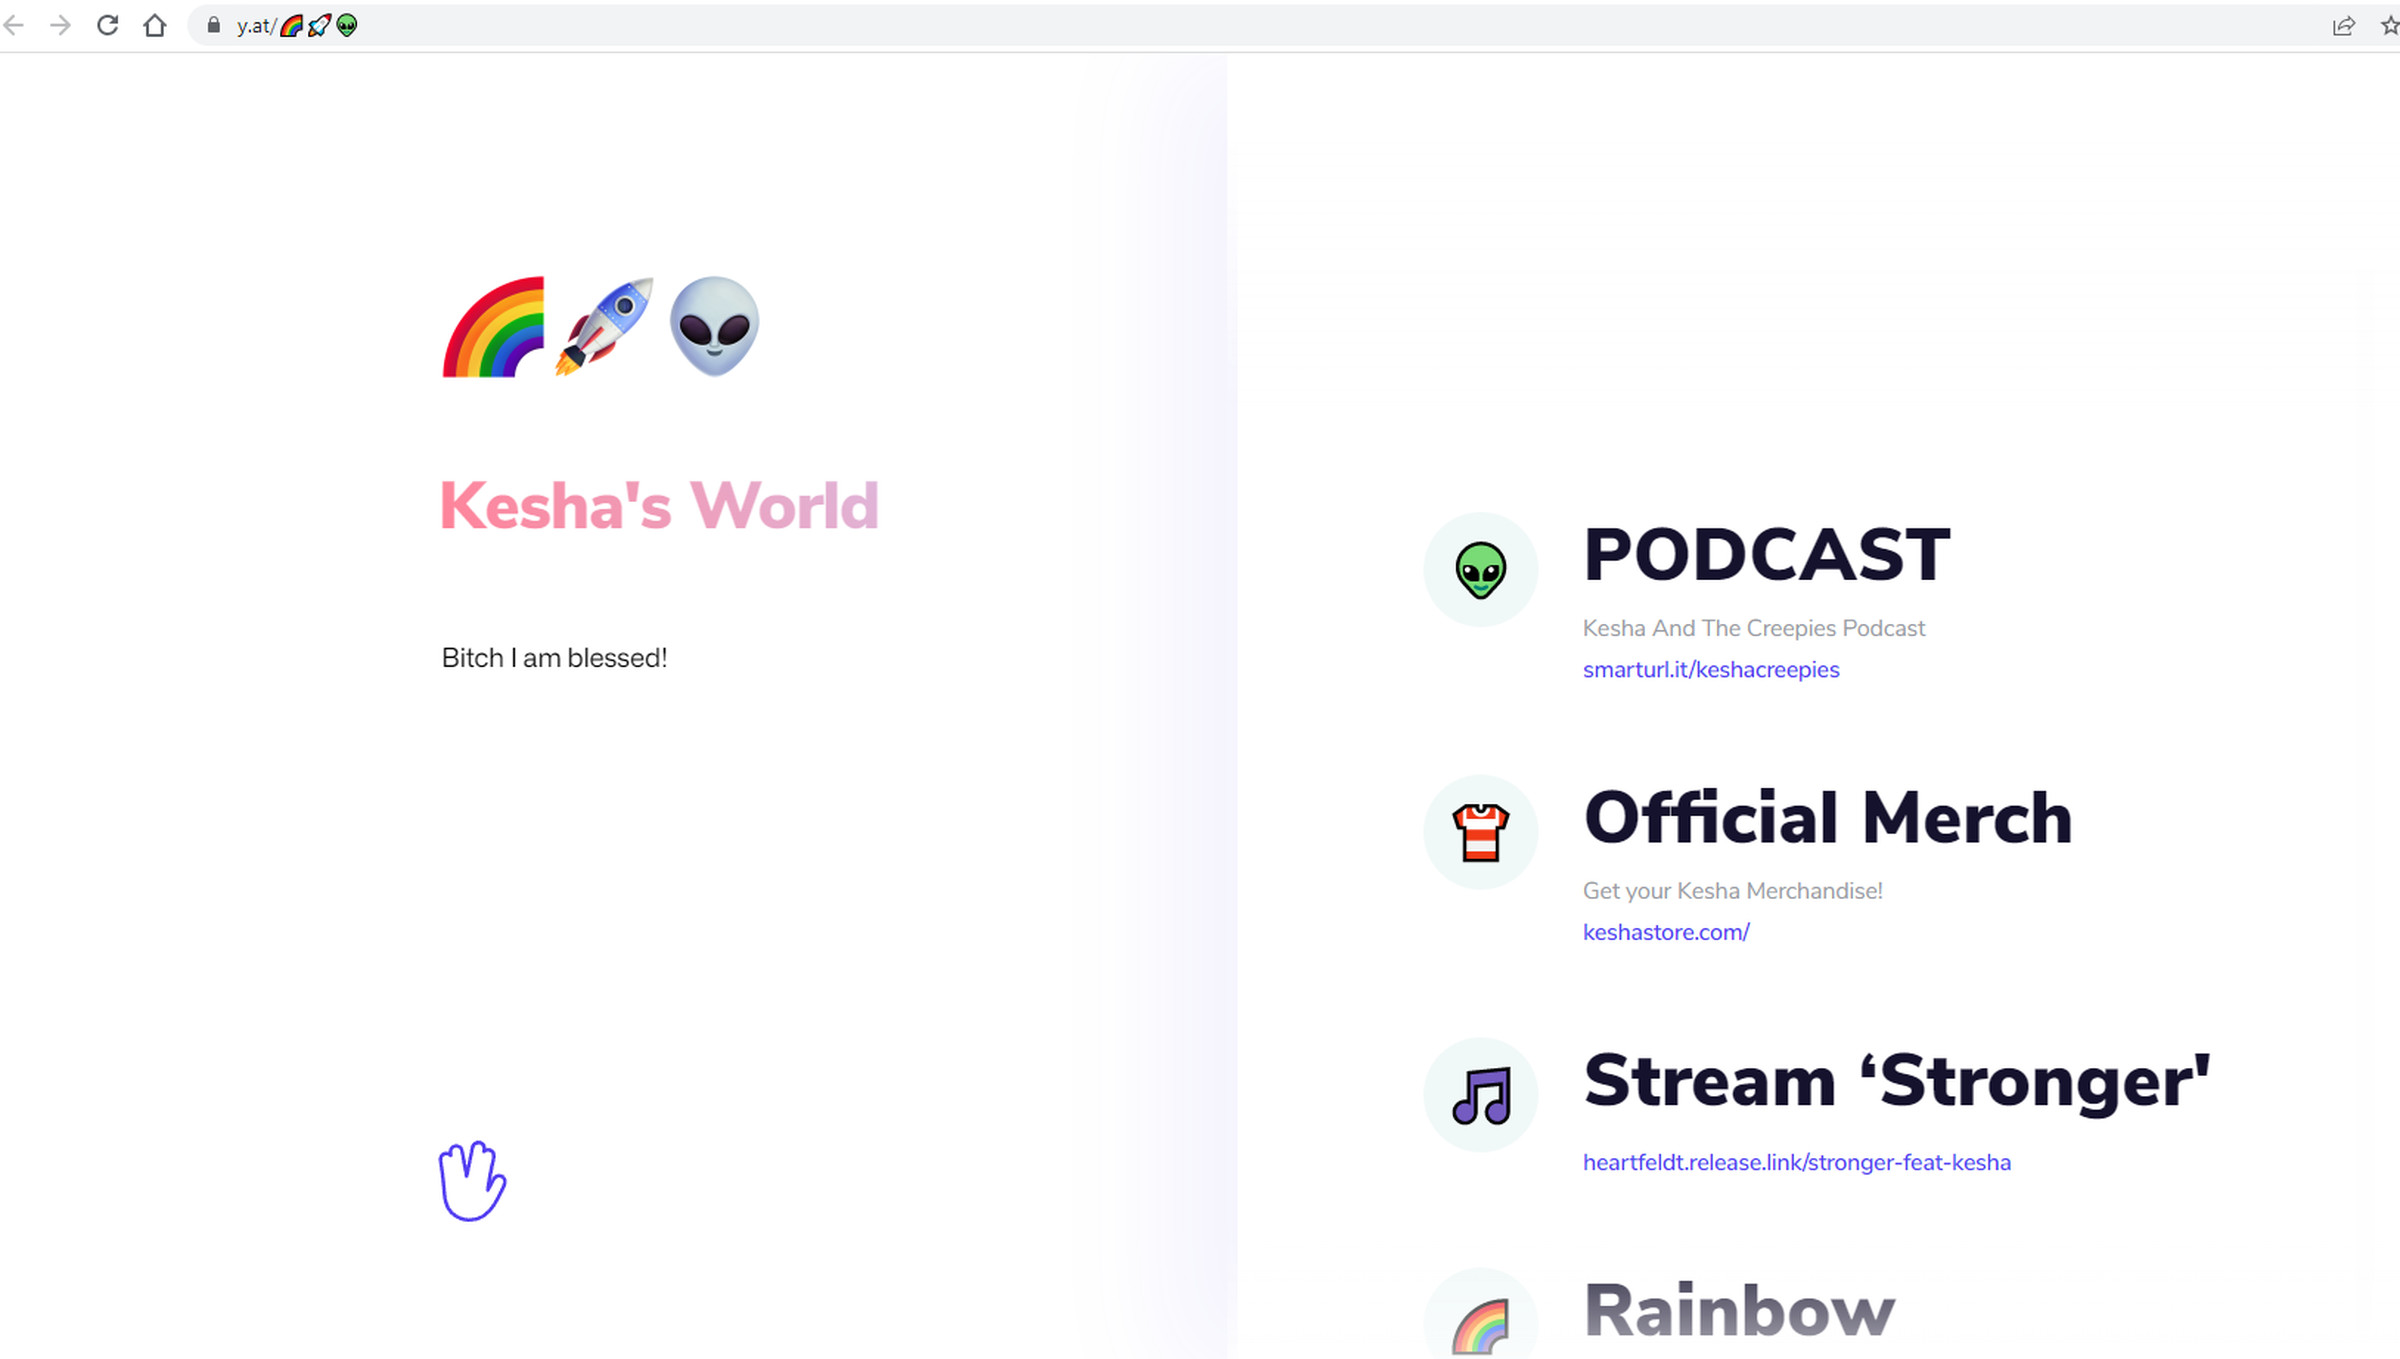 Kesha’s Rainbow, Rocket, Alien Yat page redirects to her website.